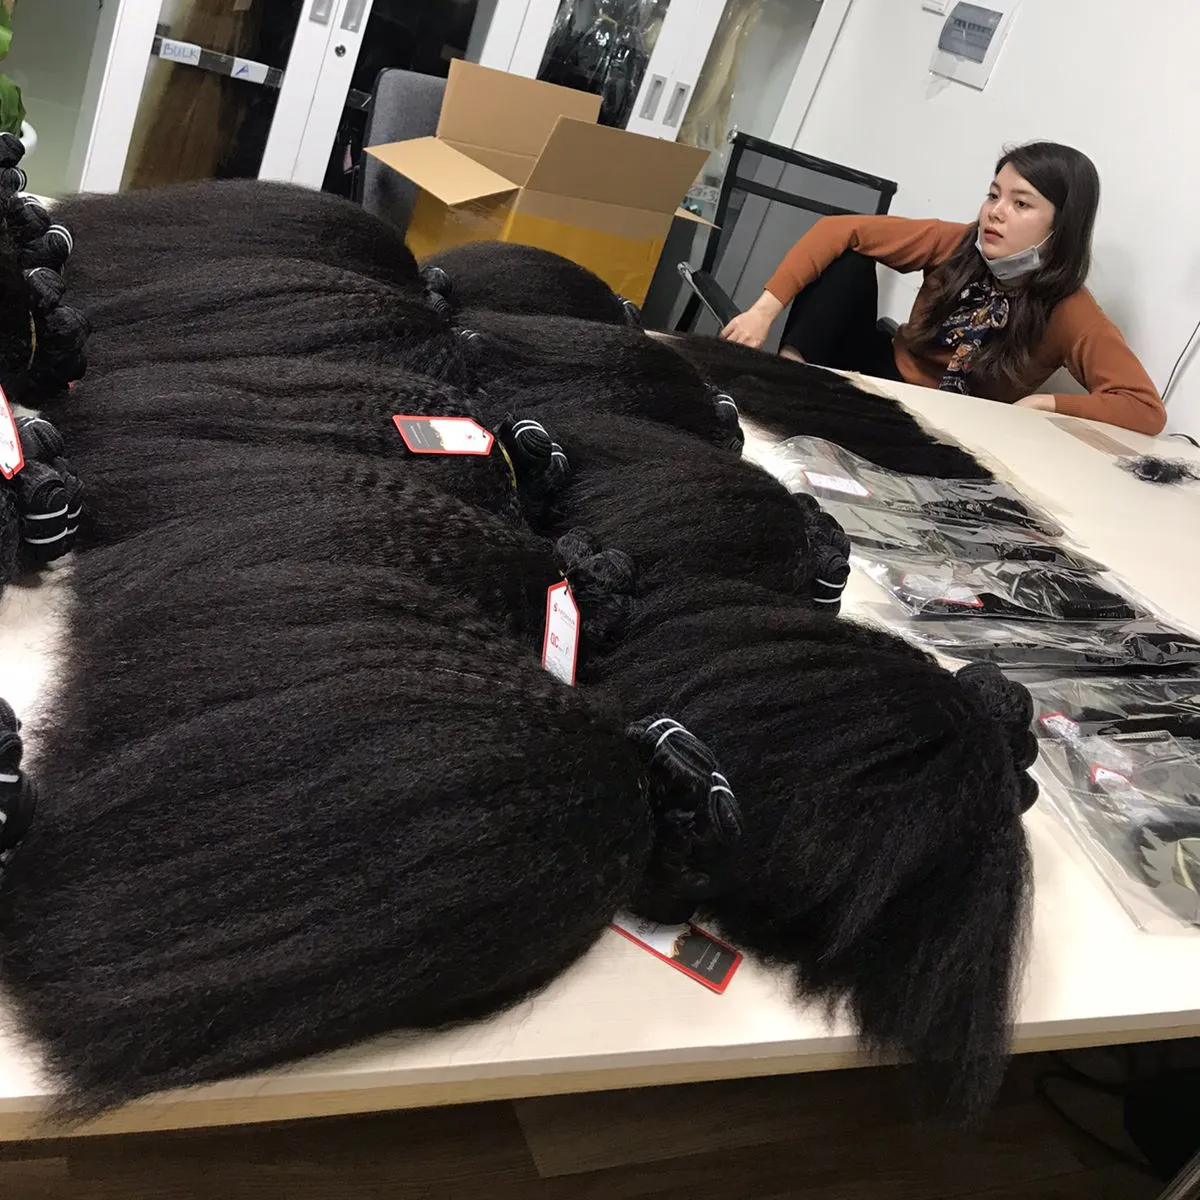 wholesale kinky straight hair weft bundles black and brown color APOHair from Vietnam raw virgin hair wholesale